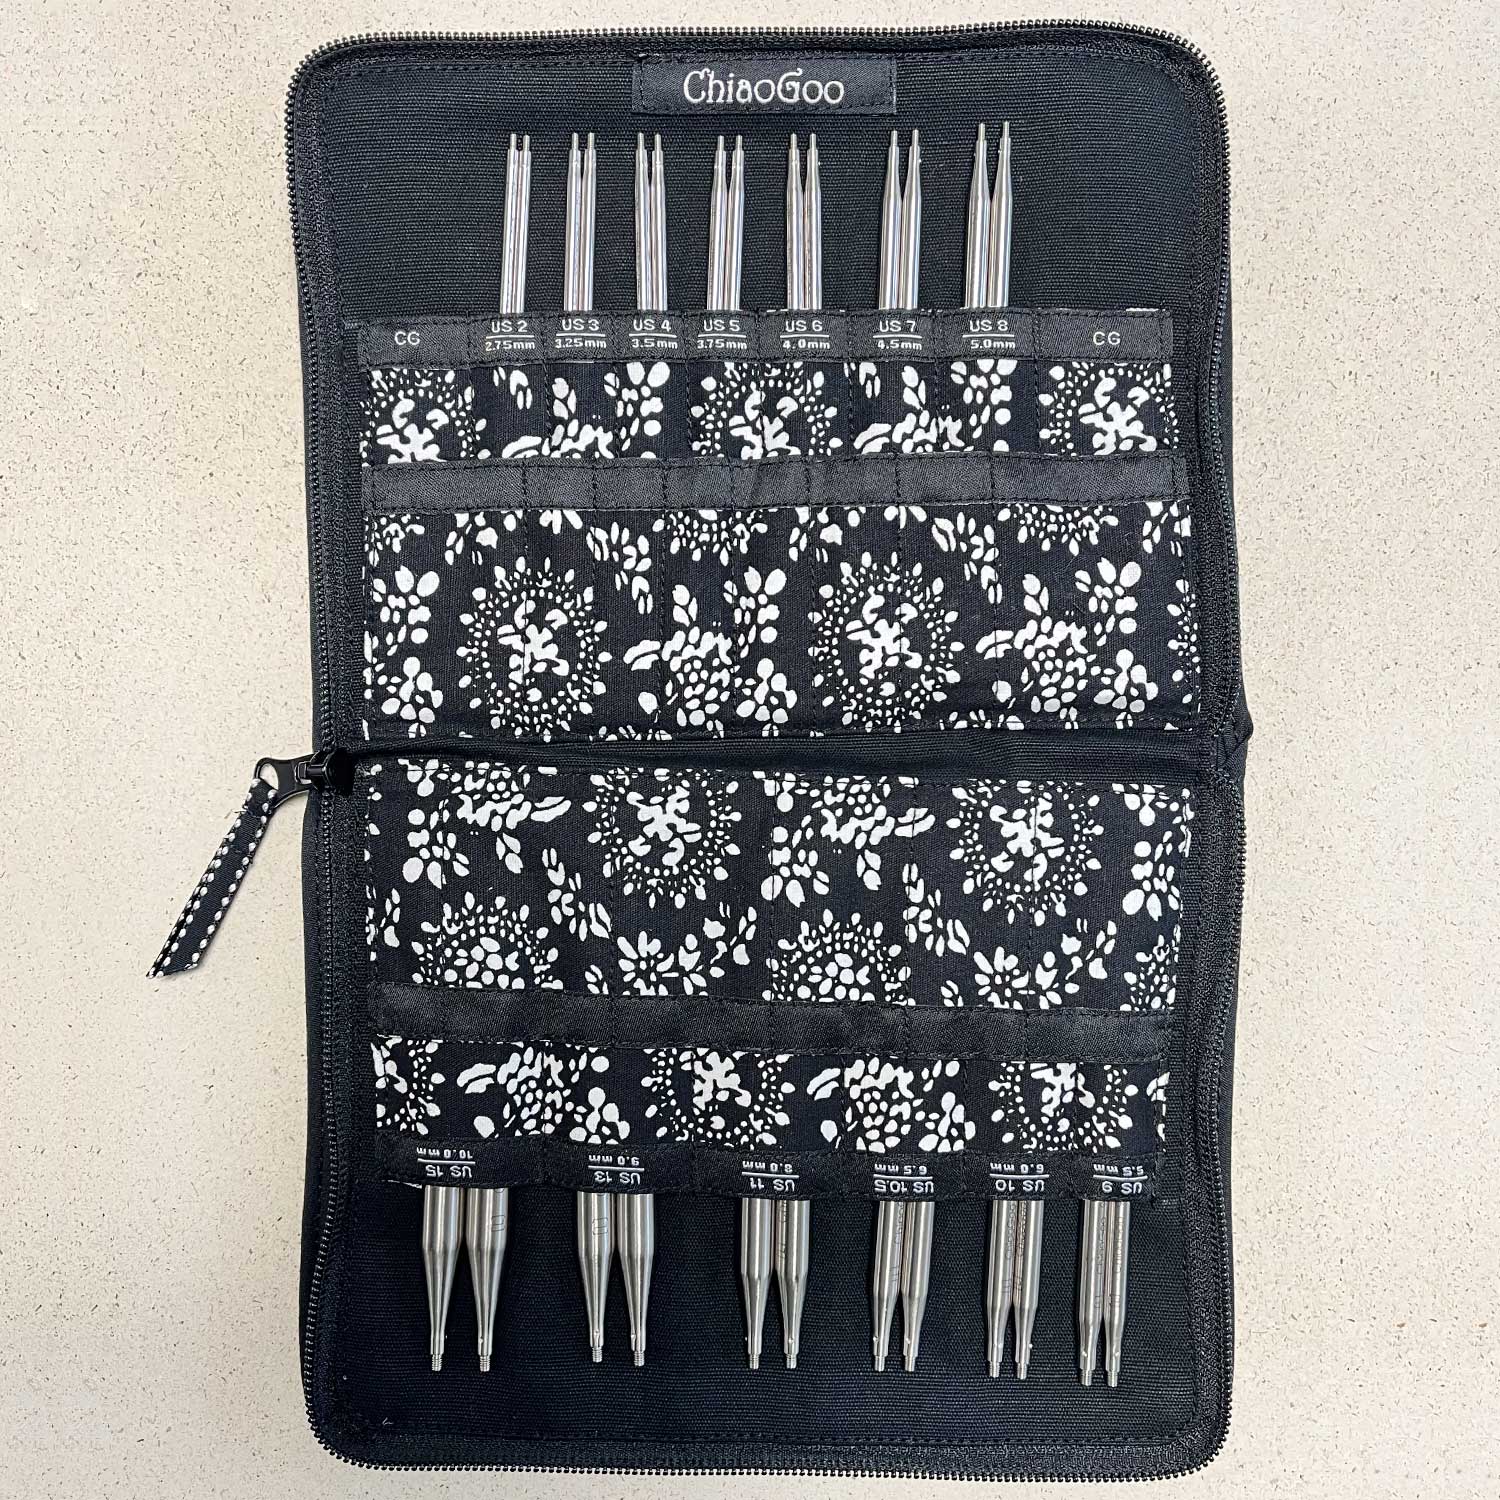 ChiaoGoo TWIST RedLace Set Complete Circular Knitting Needle Set (2.75 - 10mm)